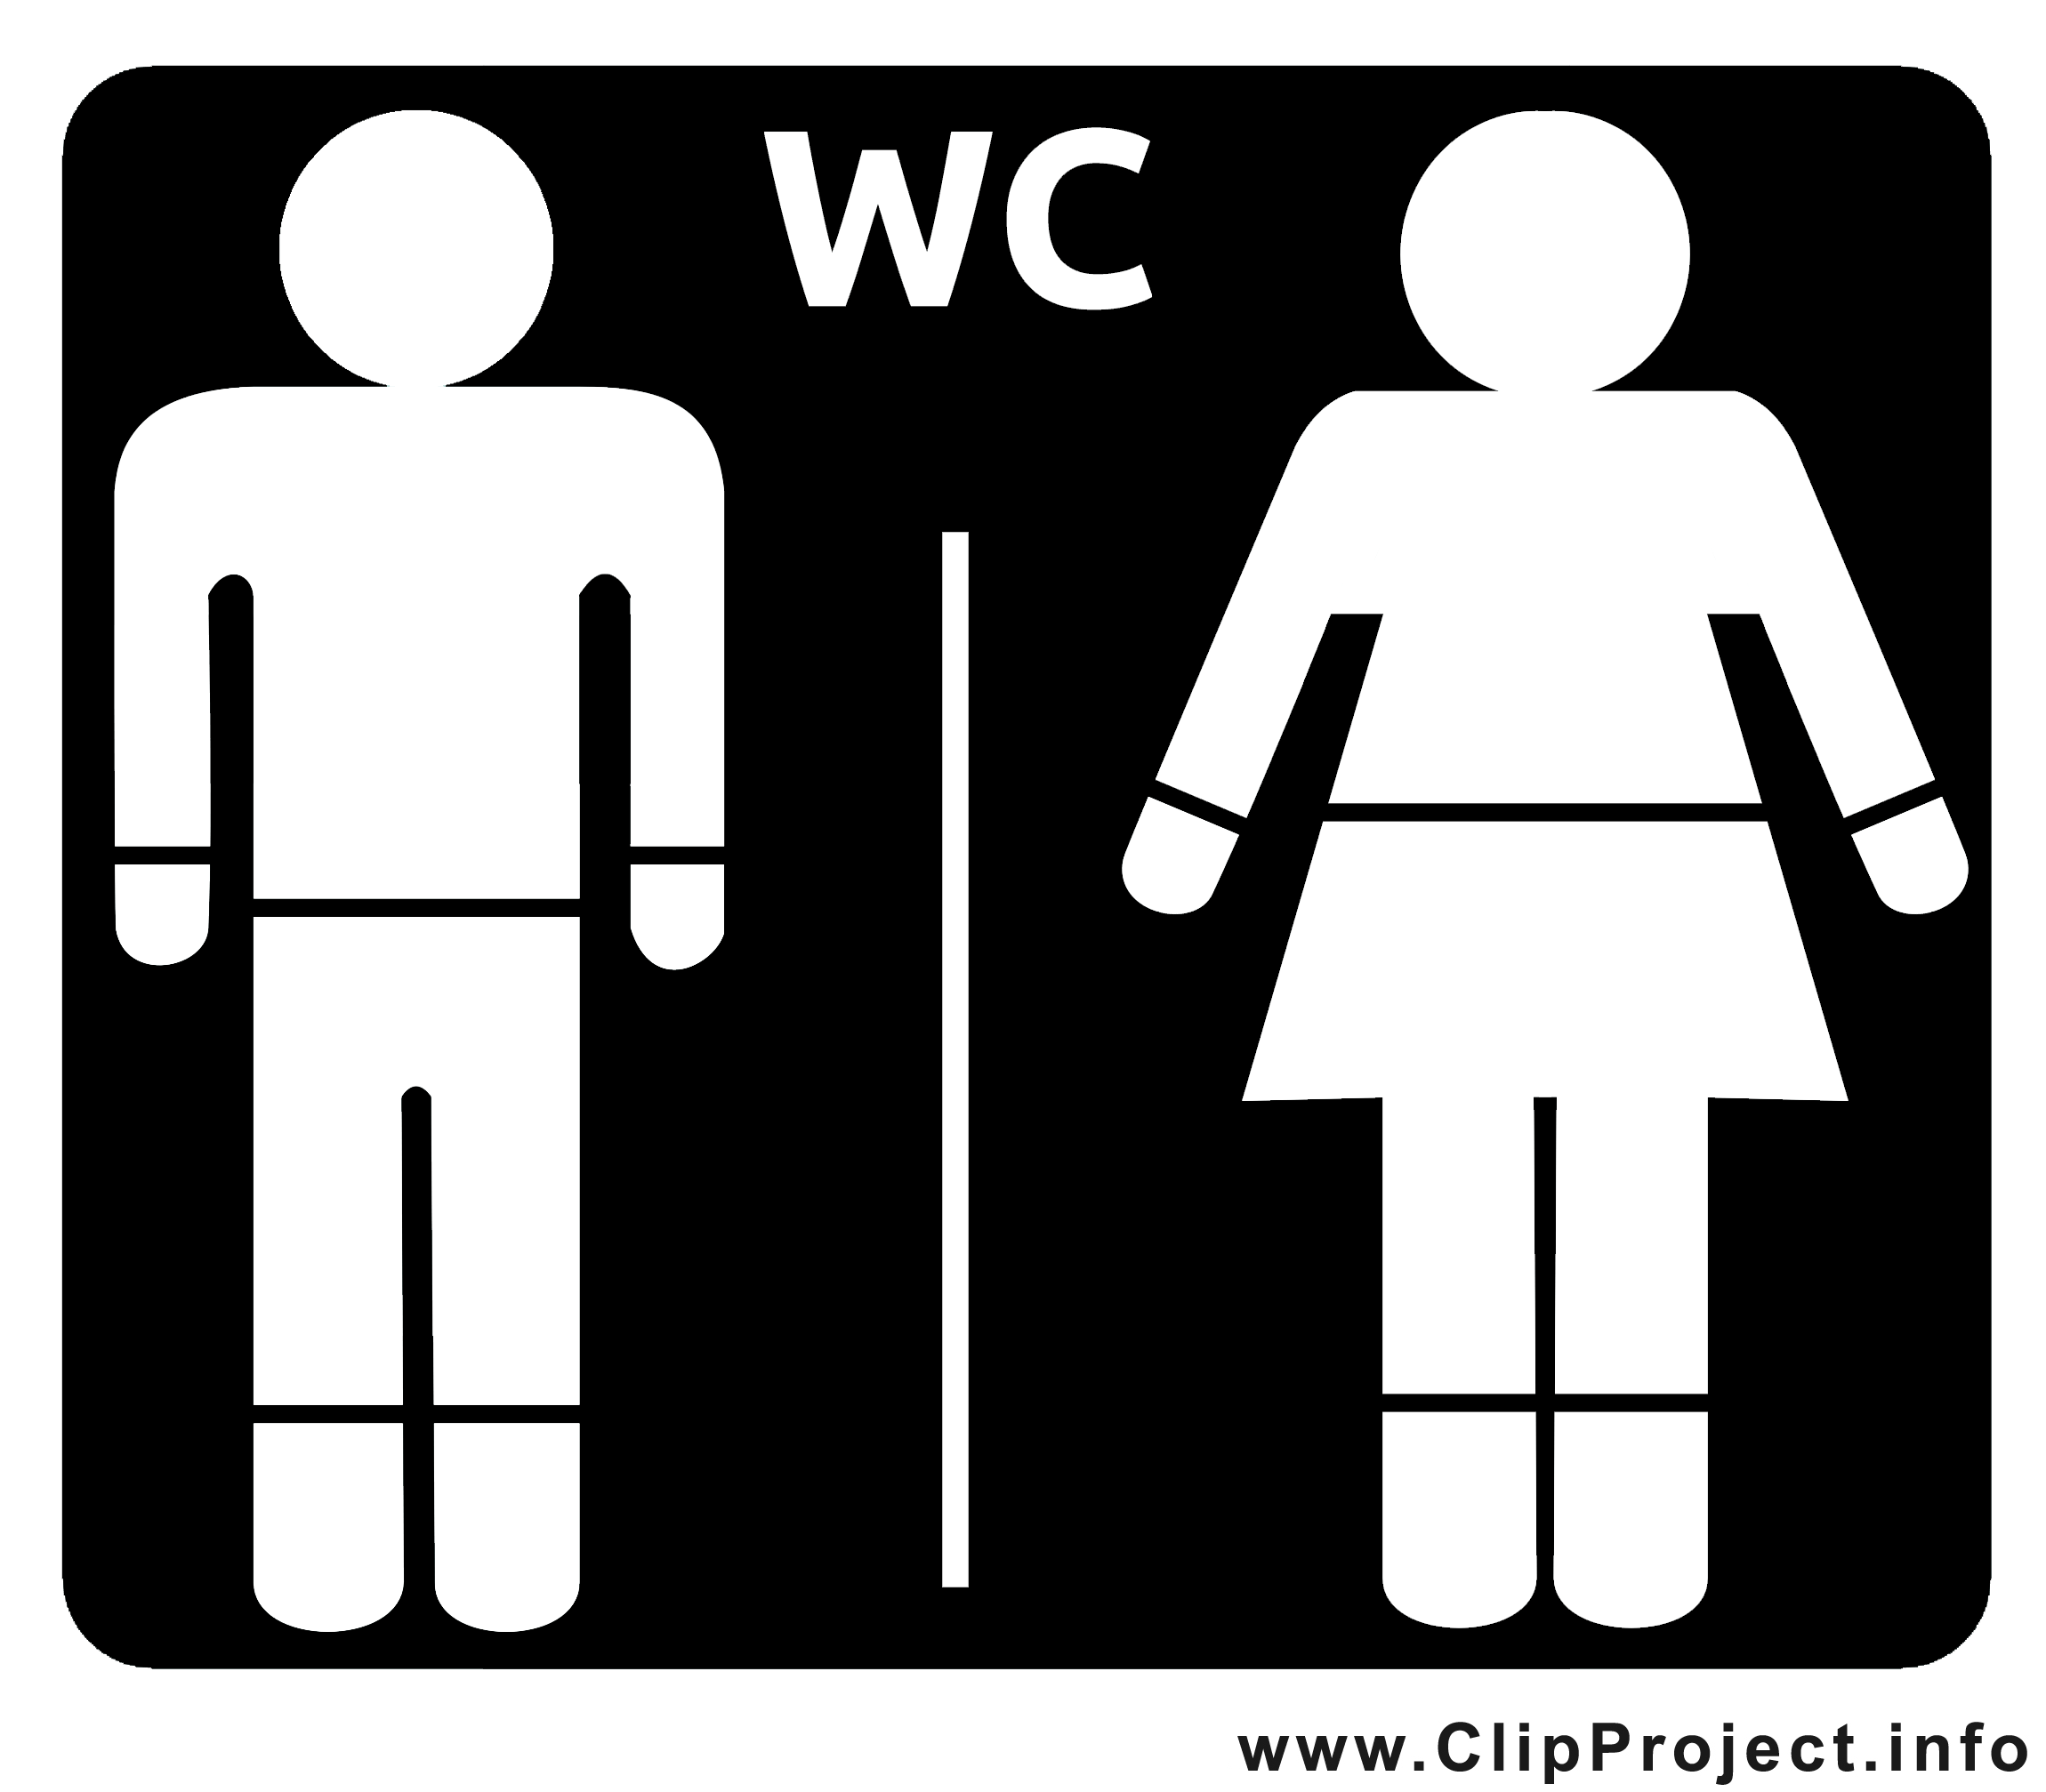 clipart wc kostenlos - photo #3